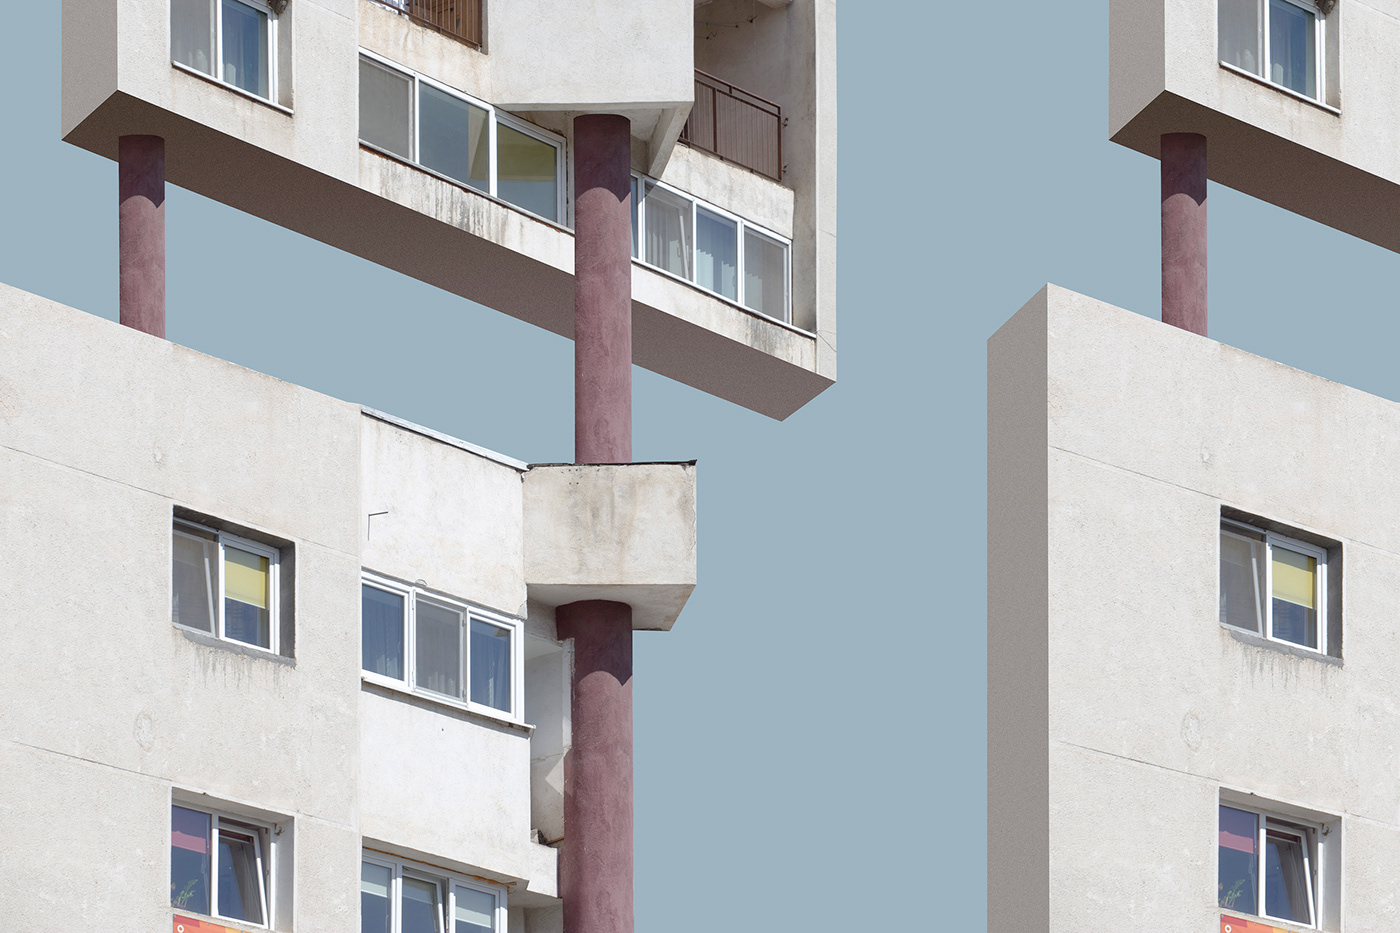 minimal Minimalism urbanism   architecture Brutalism budapest building abstract city Urban